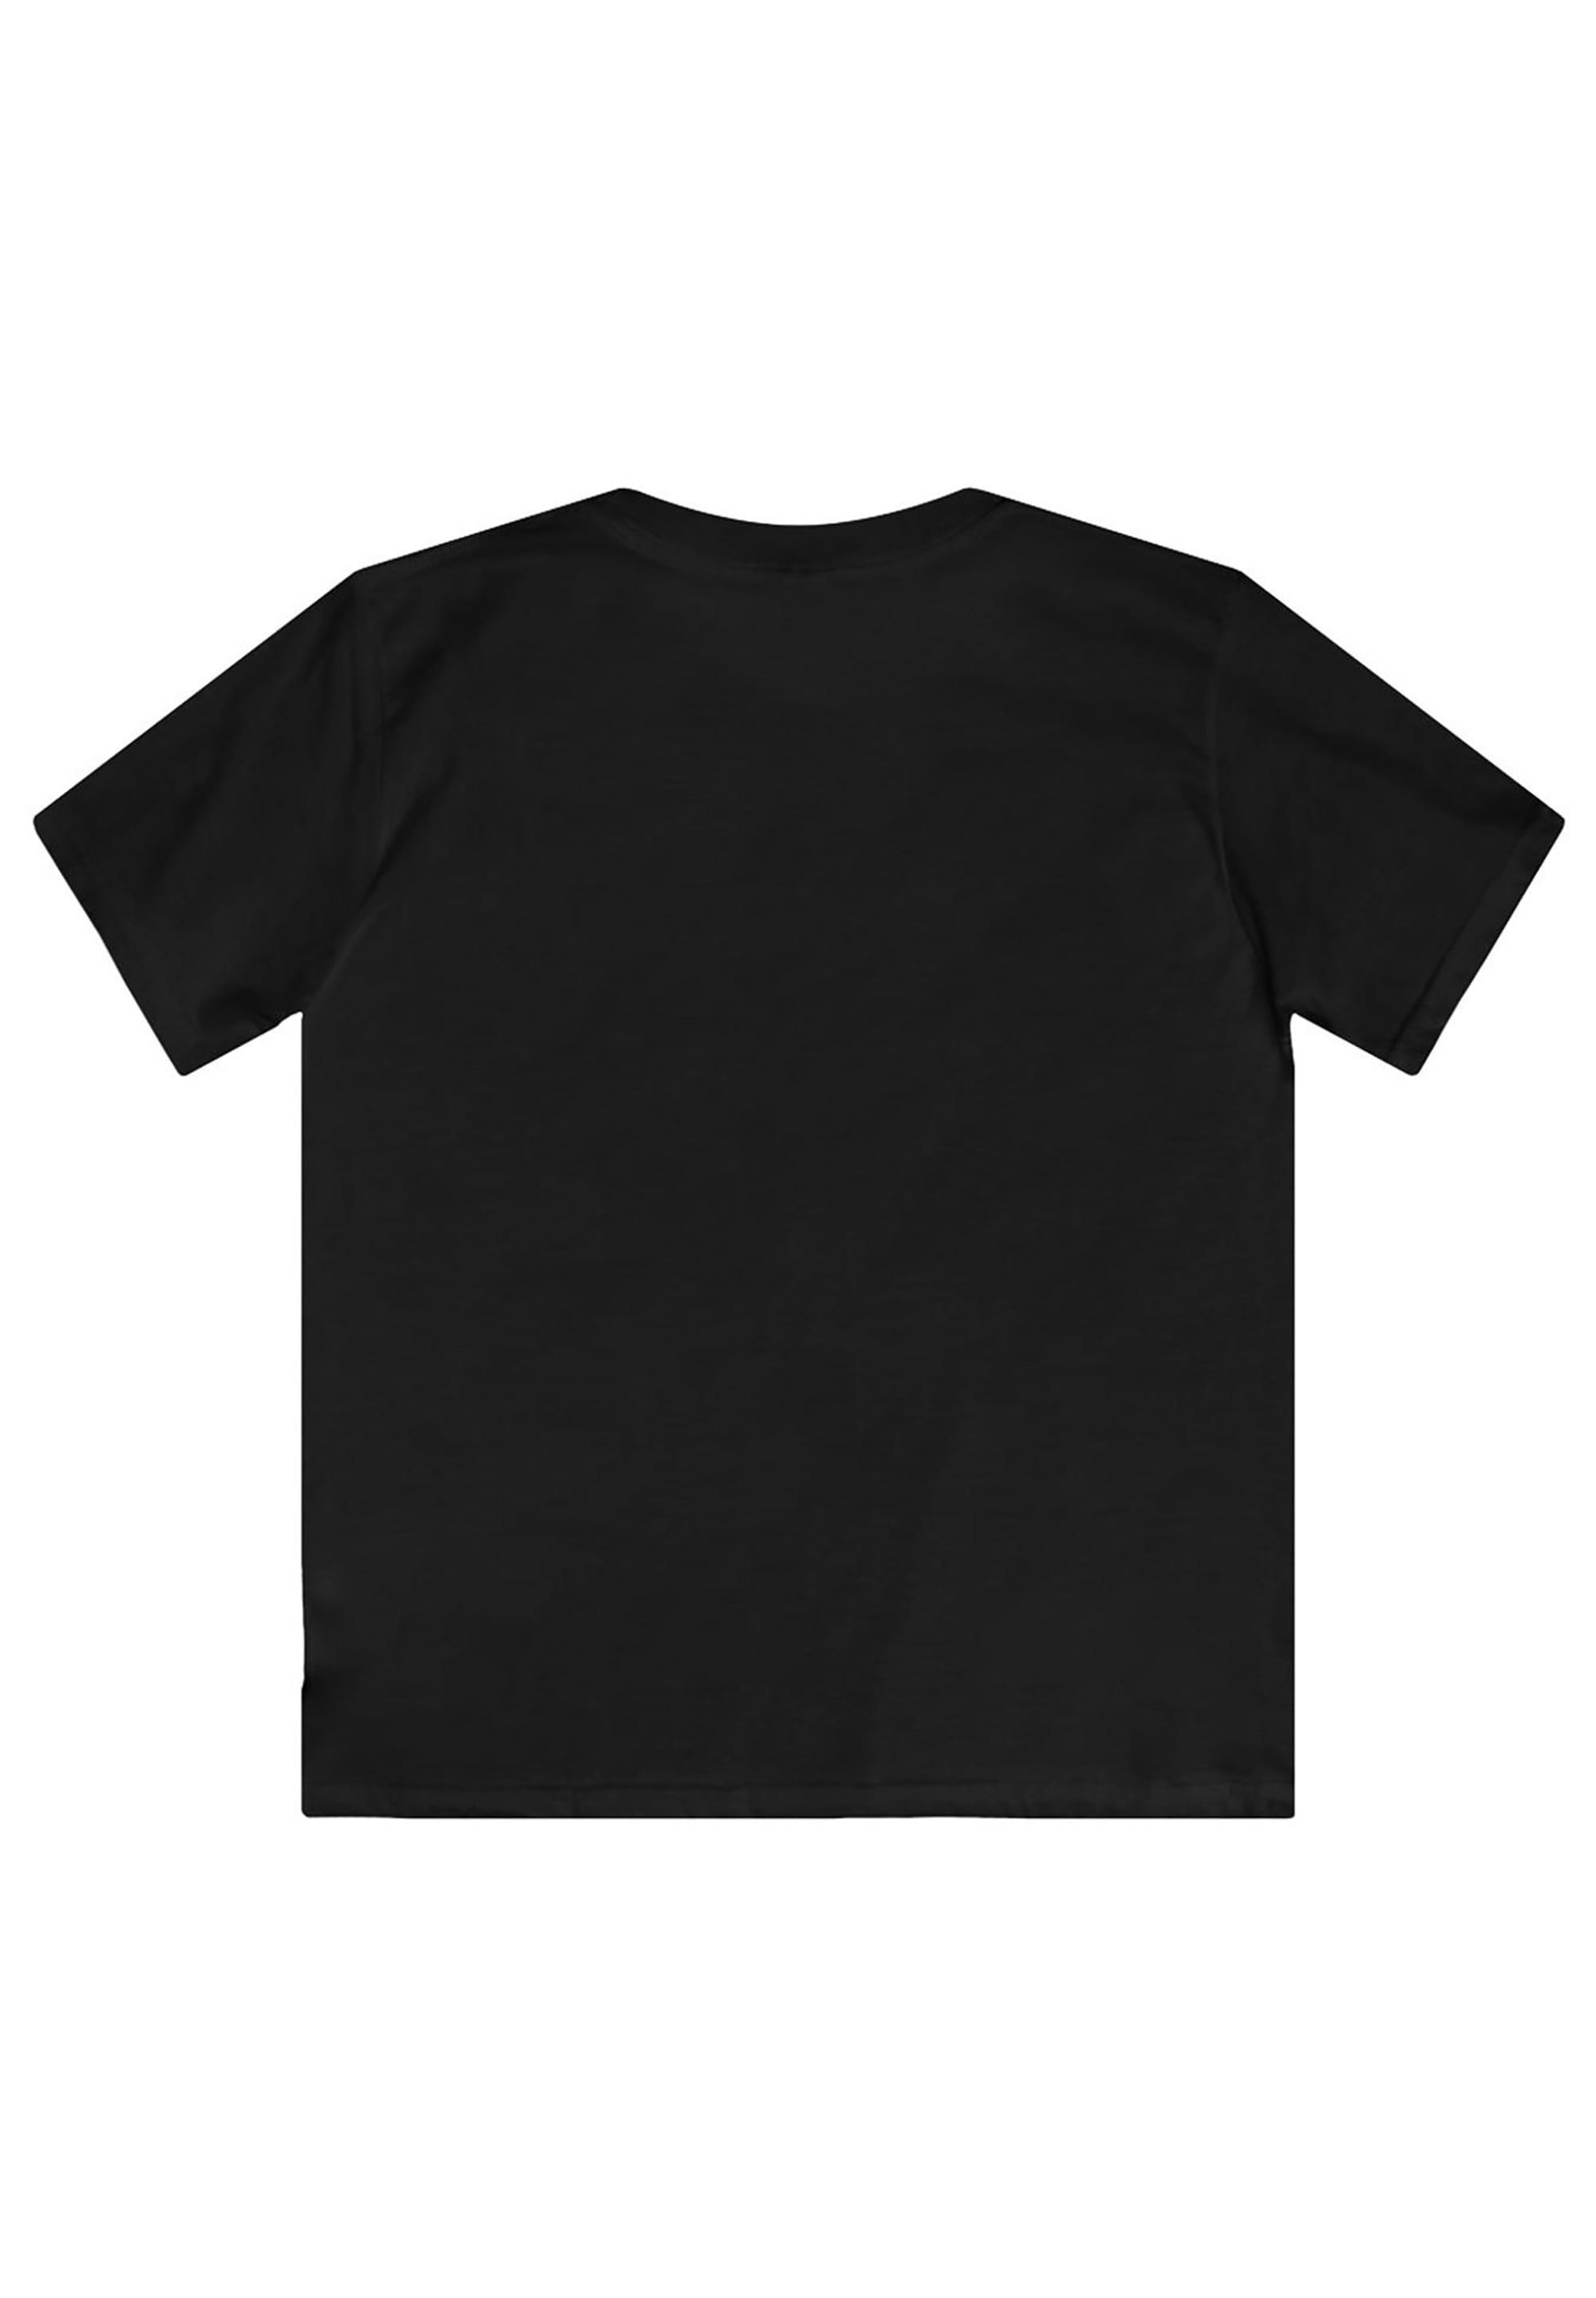 F4NT4STIC T-Shirt »Paw Patrol Skye Big Sister«, Unisex Kinder,Premium Merch,Jungen,Mädchen,Bedruckt